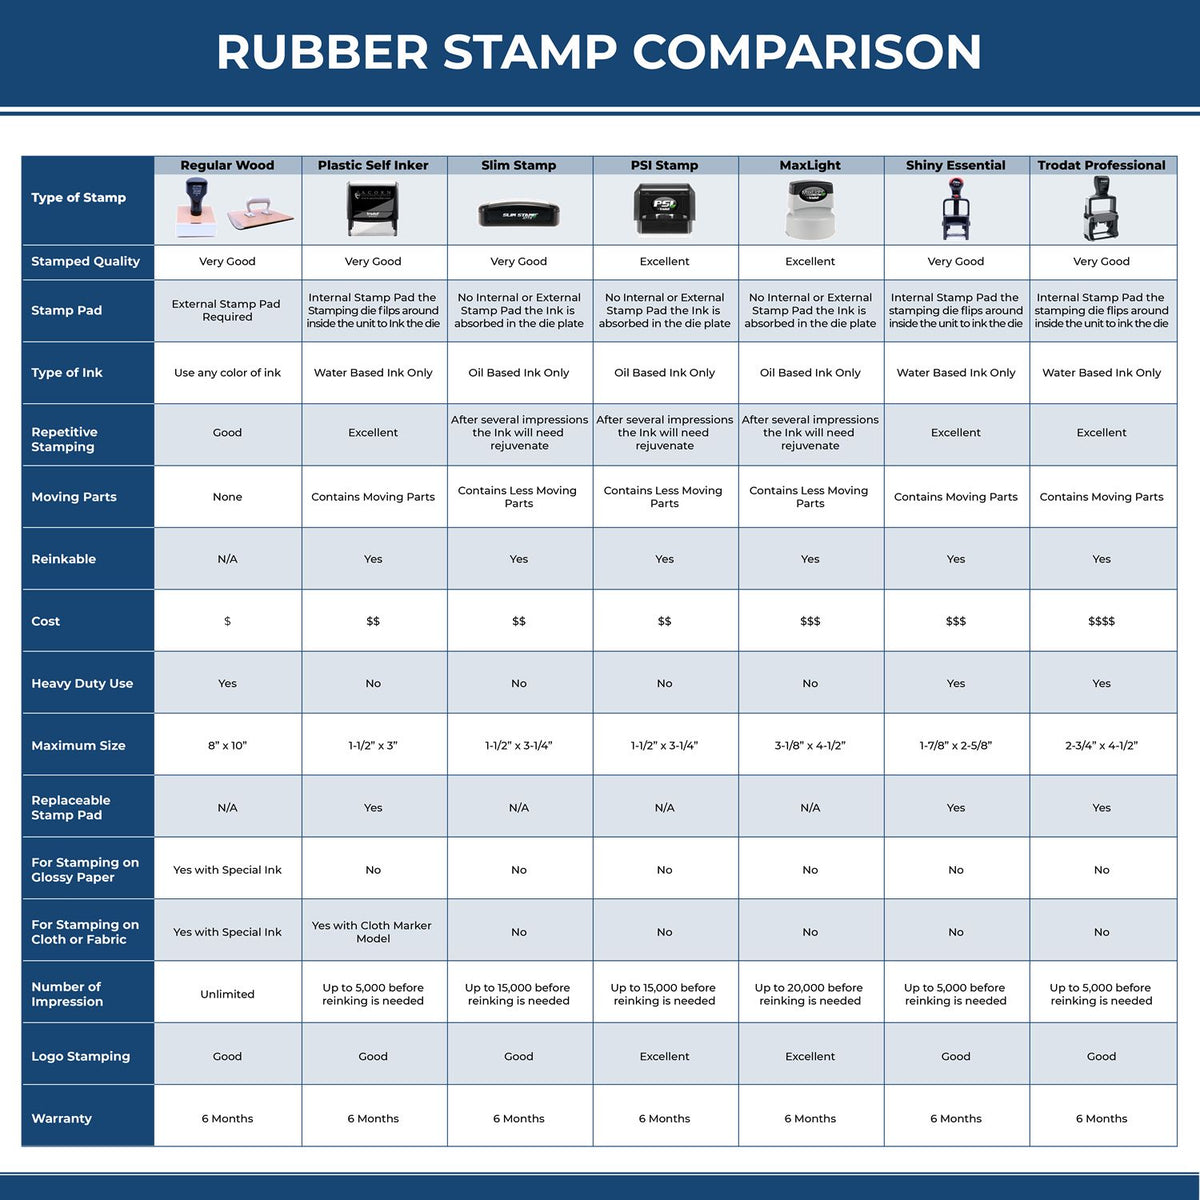 Large Self-Quarantine Rubber Stamp 5508R Rubber Stamp Comparison